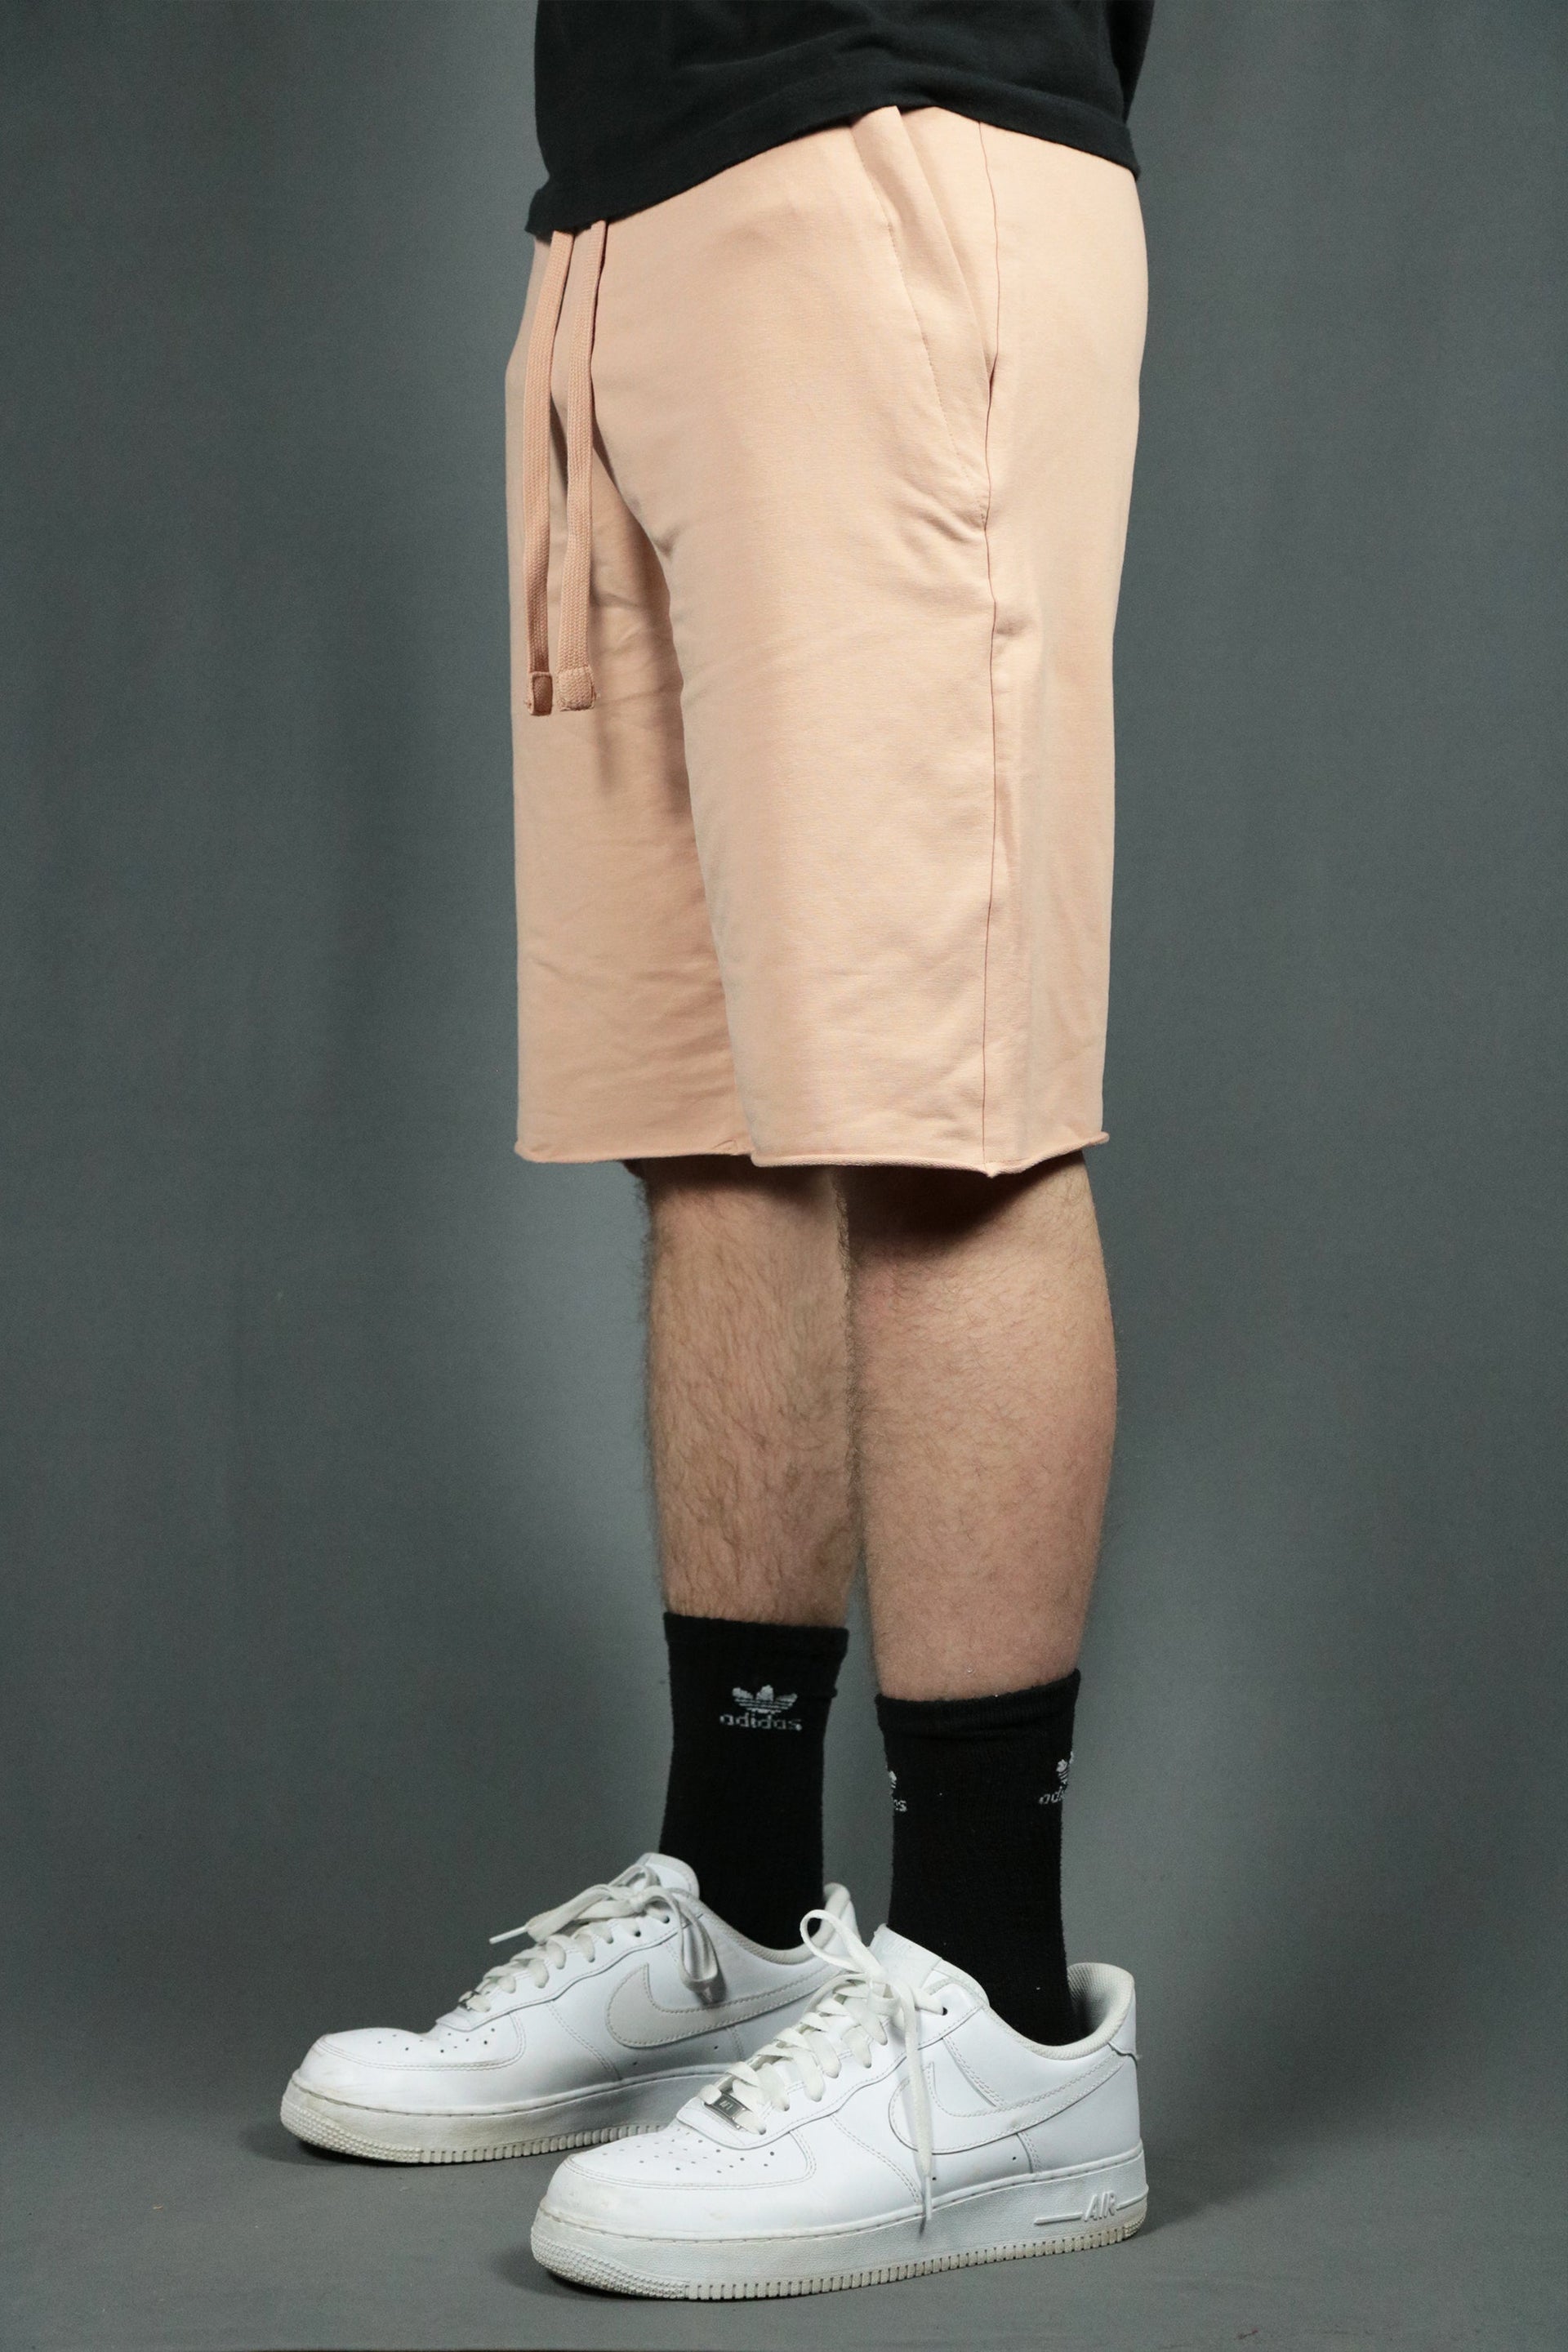 Blush french terry shorts by Jordan Craig.